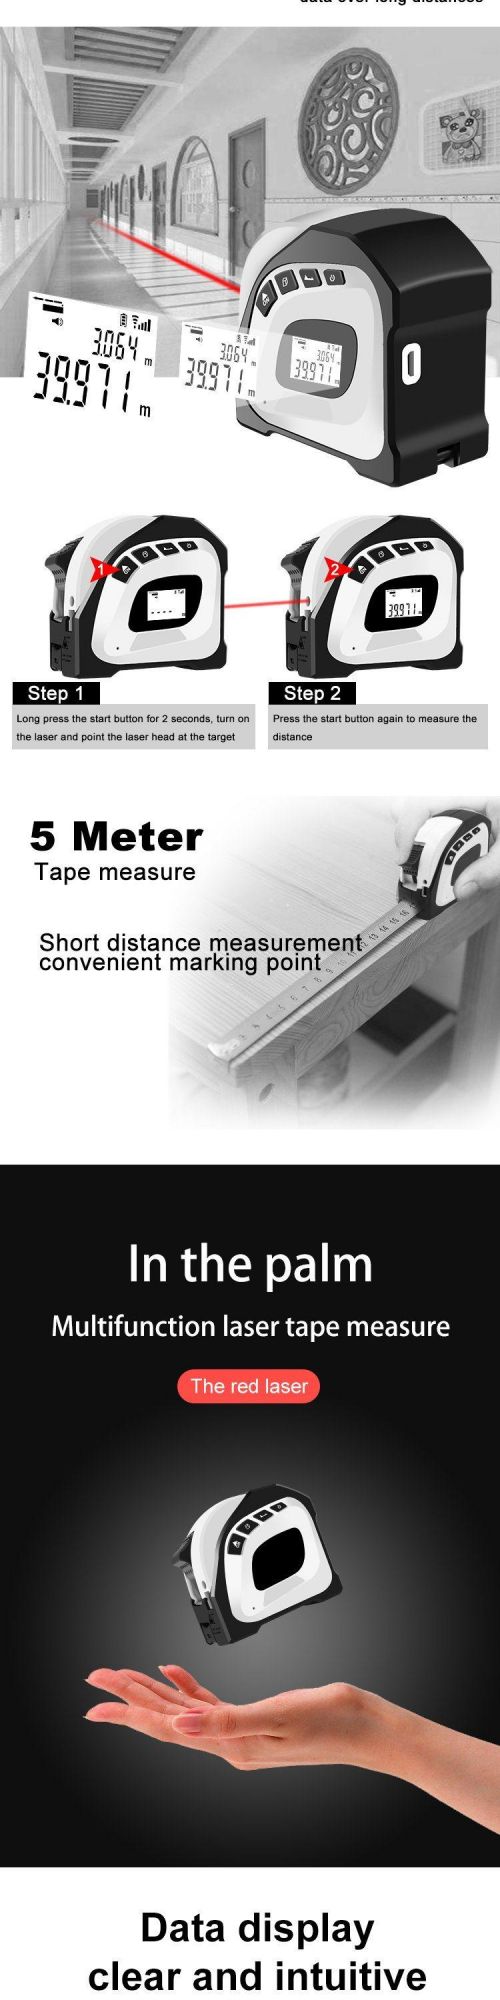 40m Distance Meter Laser Tape Measure